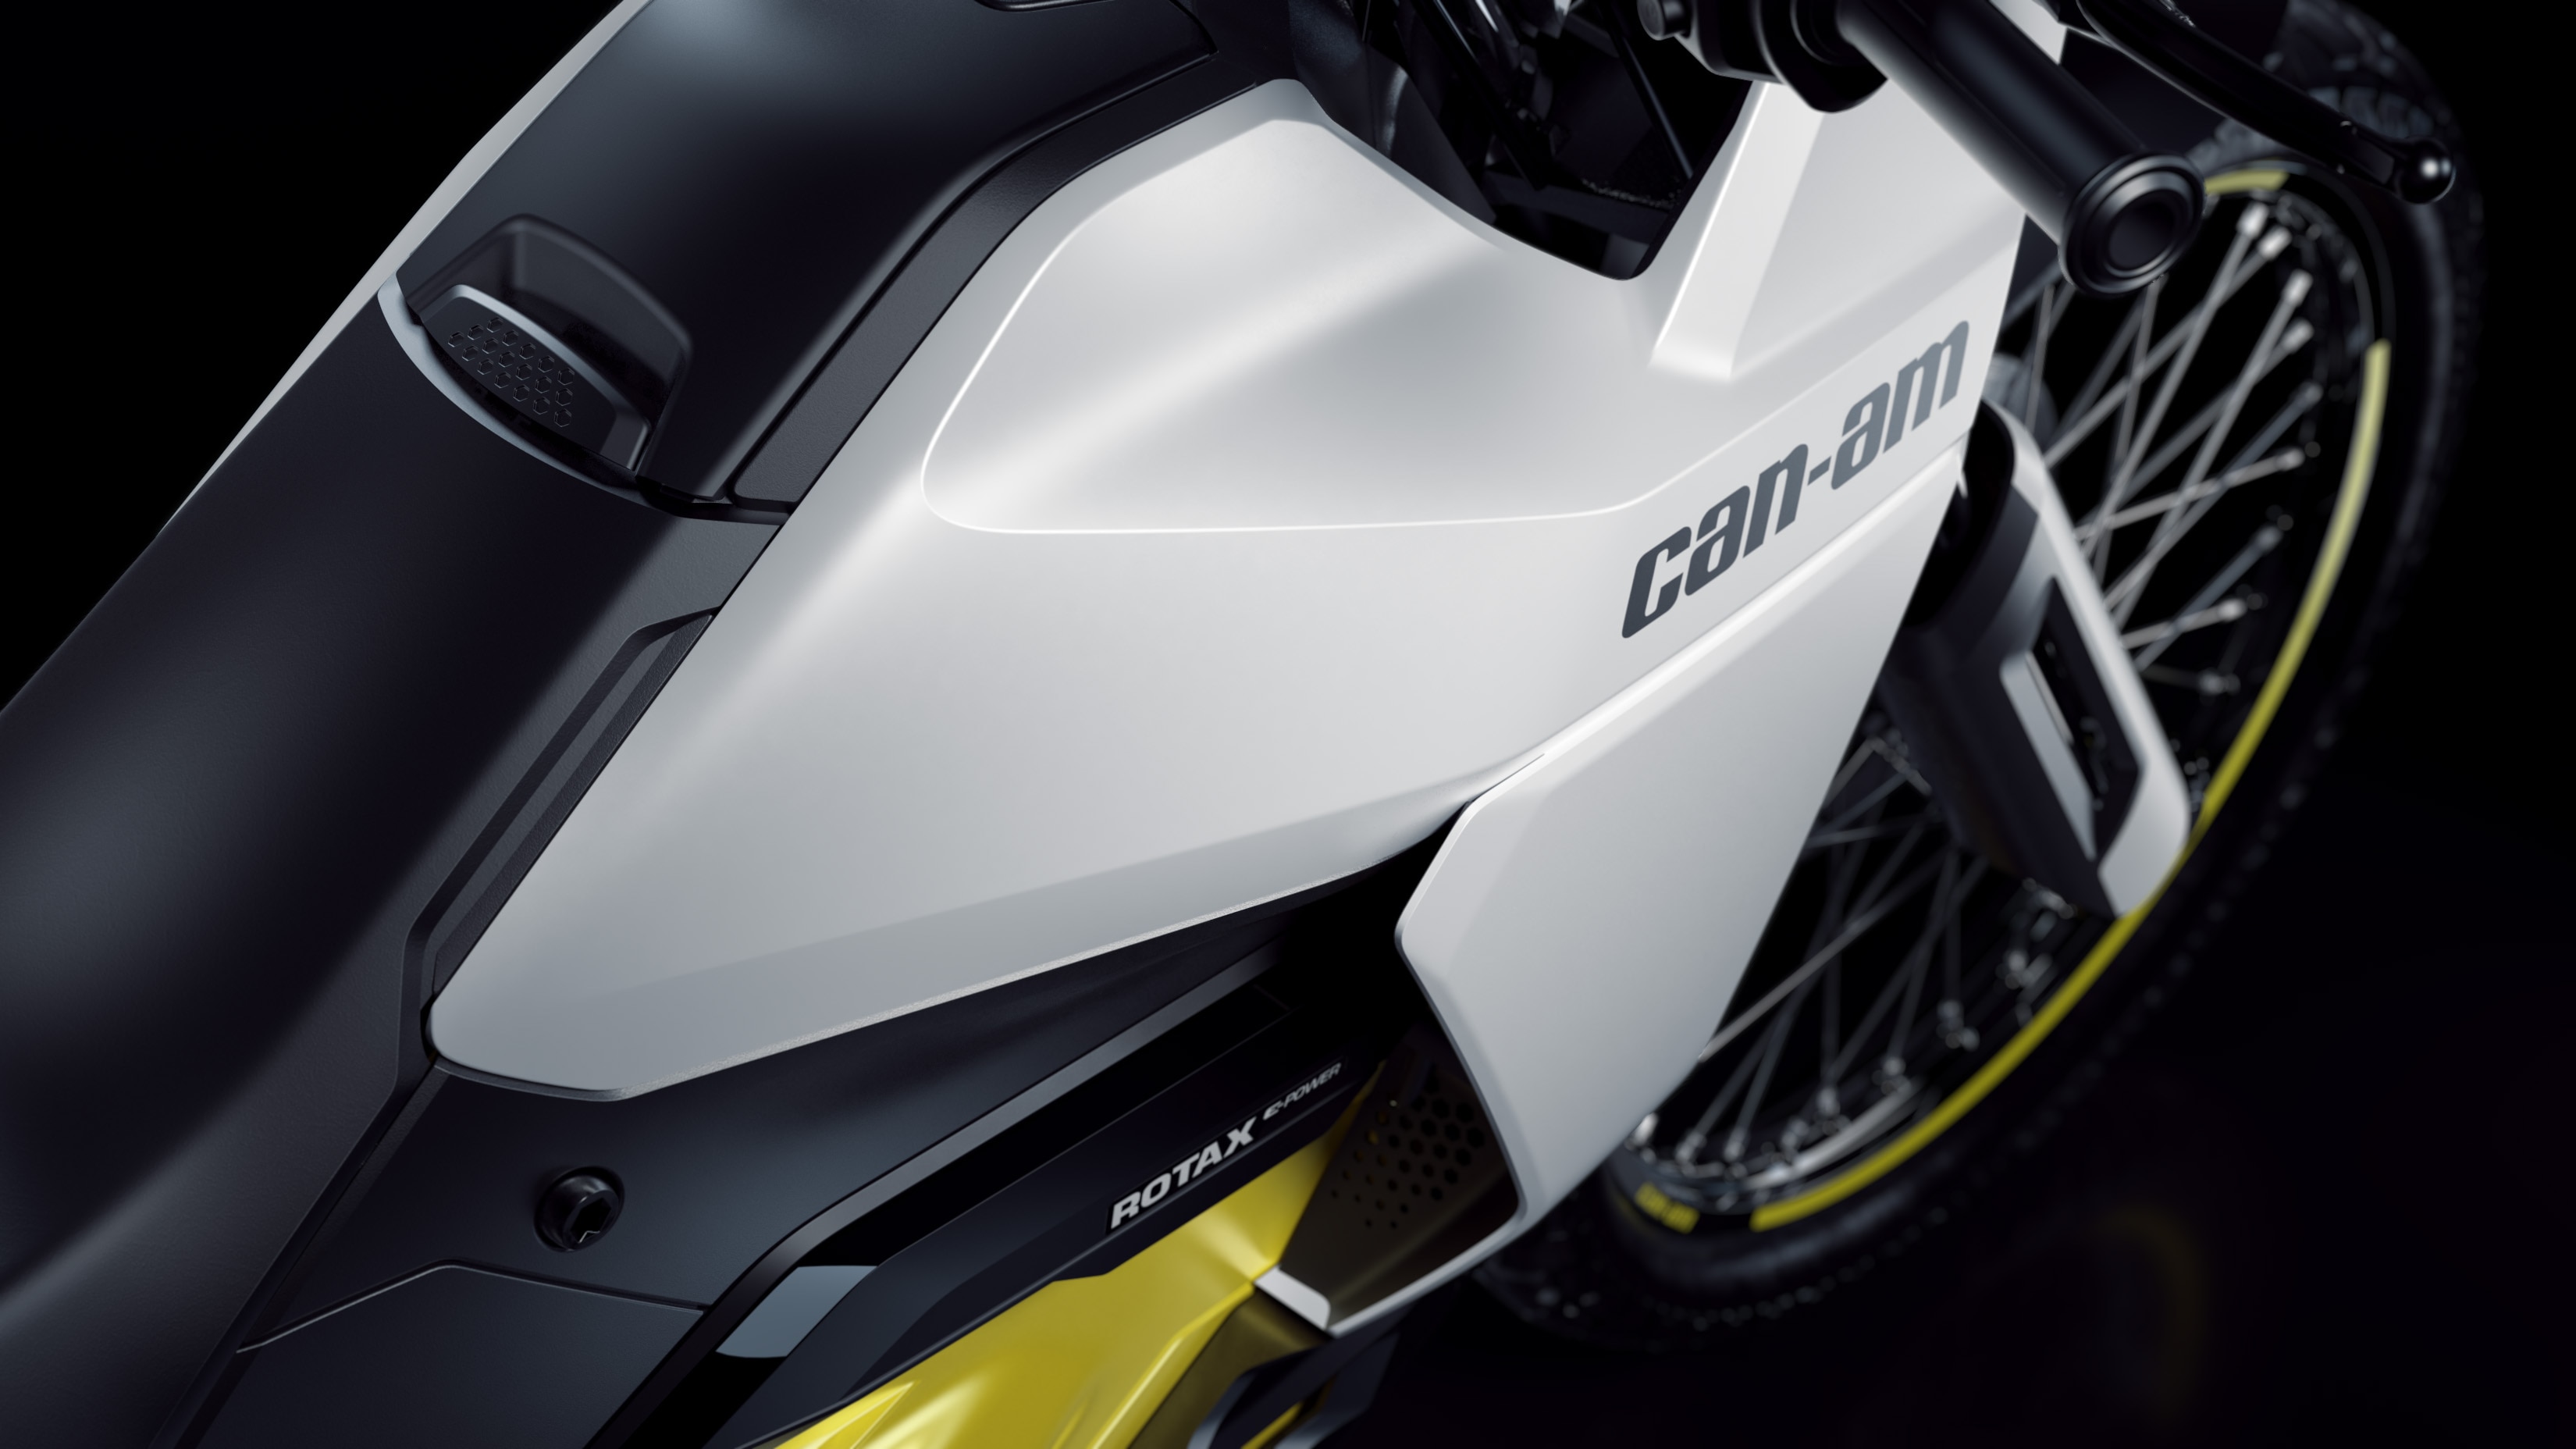 Zoom en la capota de la motocicleta Can-Am Origin